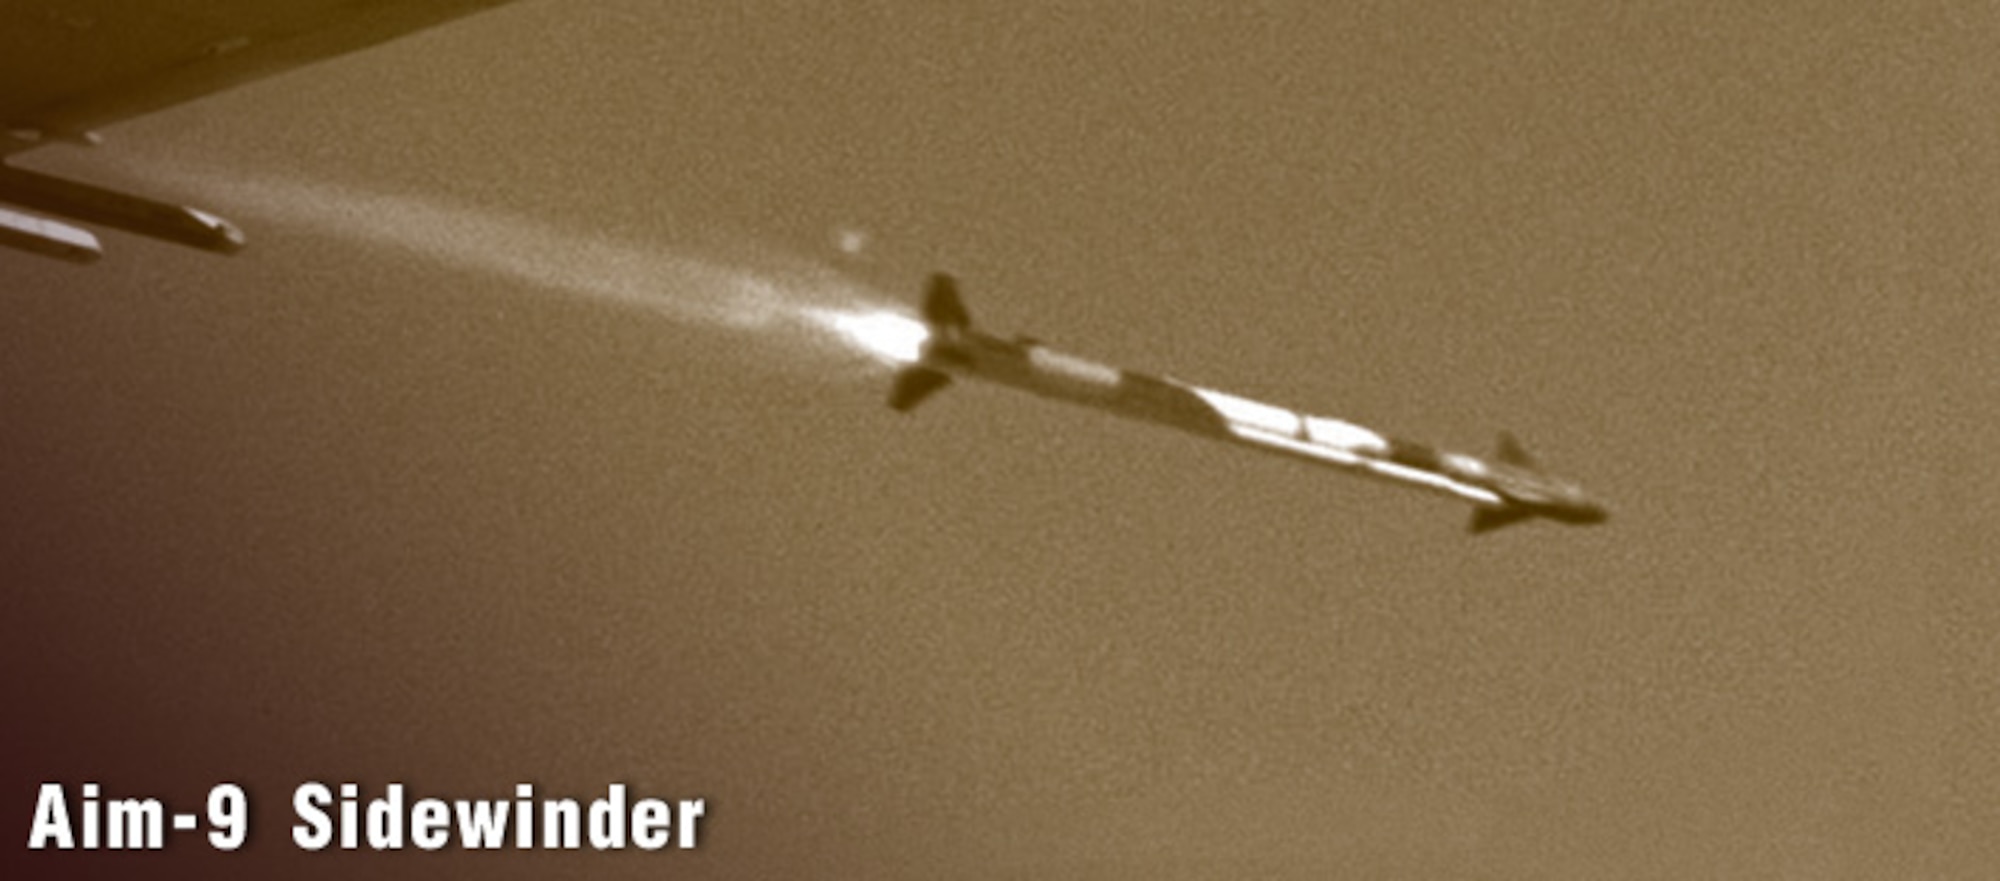 Aim-9 Sidewinder history spotlight graphic, U.S. Air Force graphic